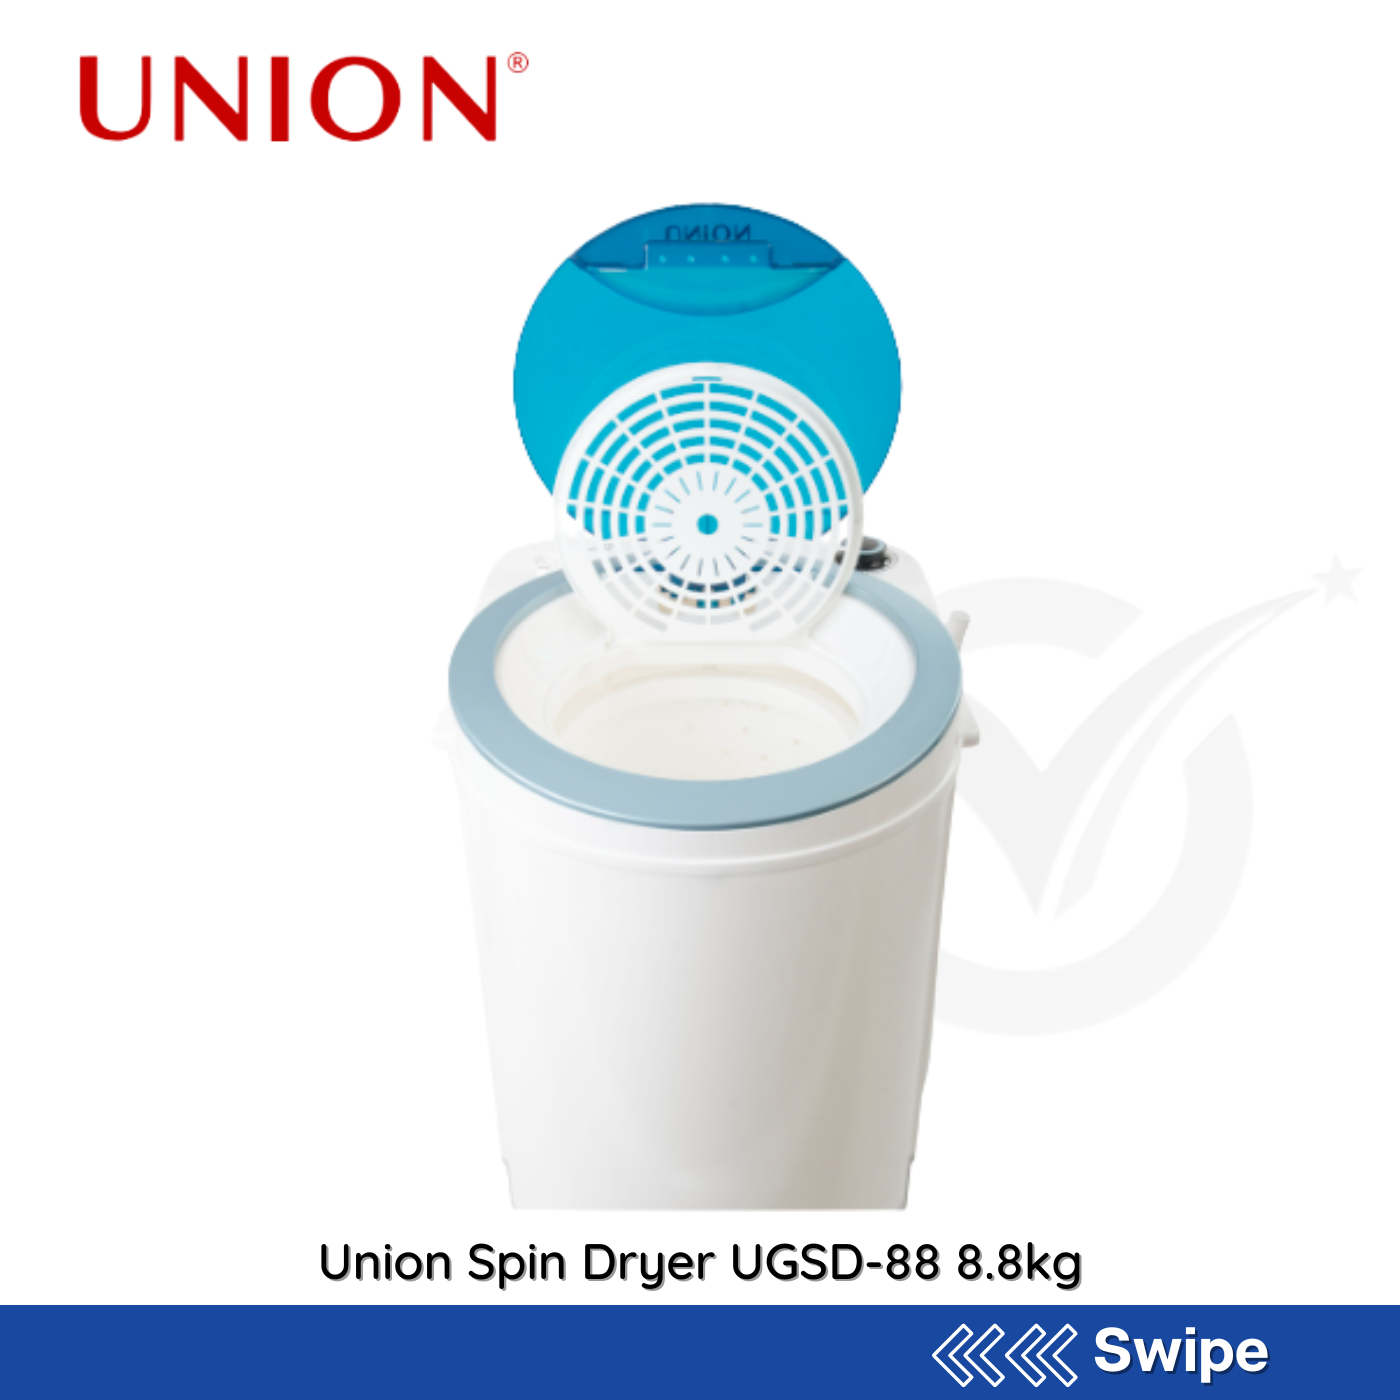 Union Spin Dryer UGSD-88 8.8kg